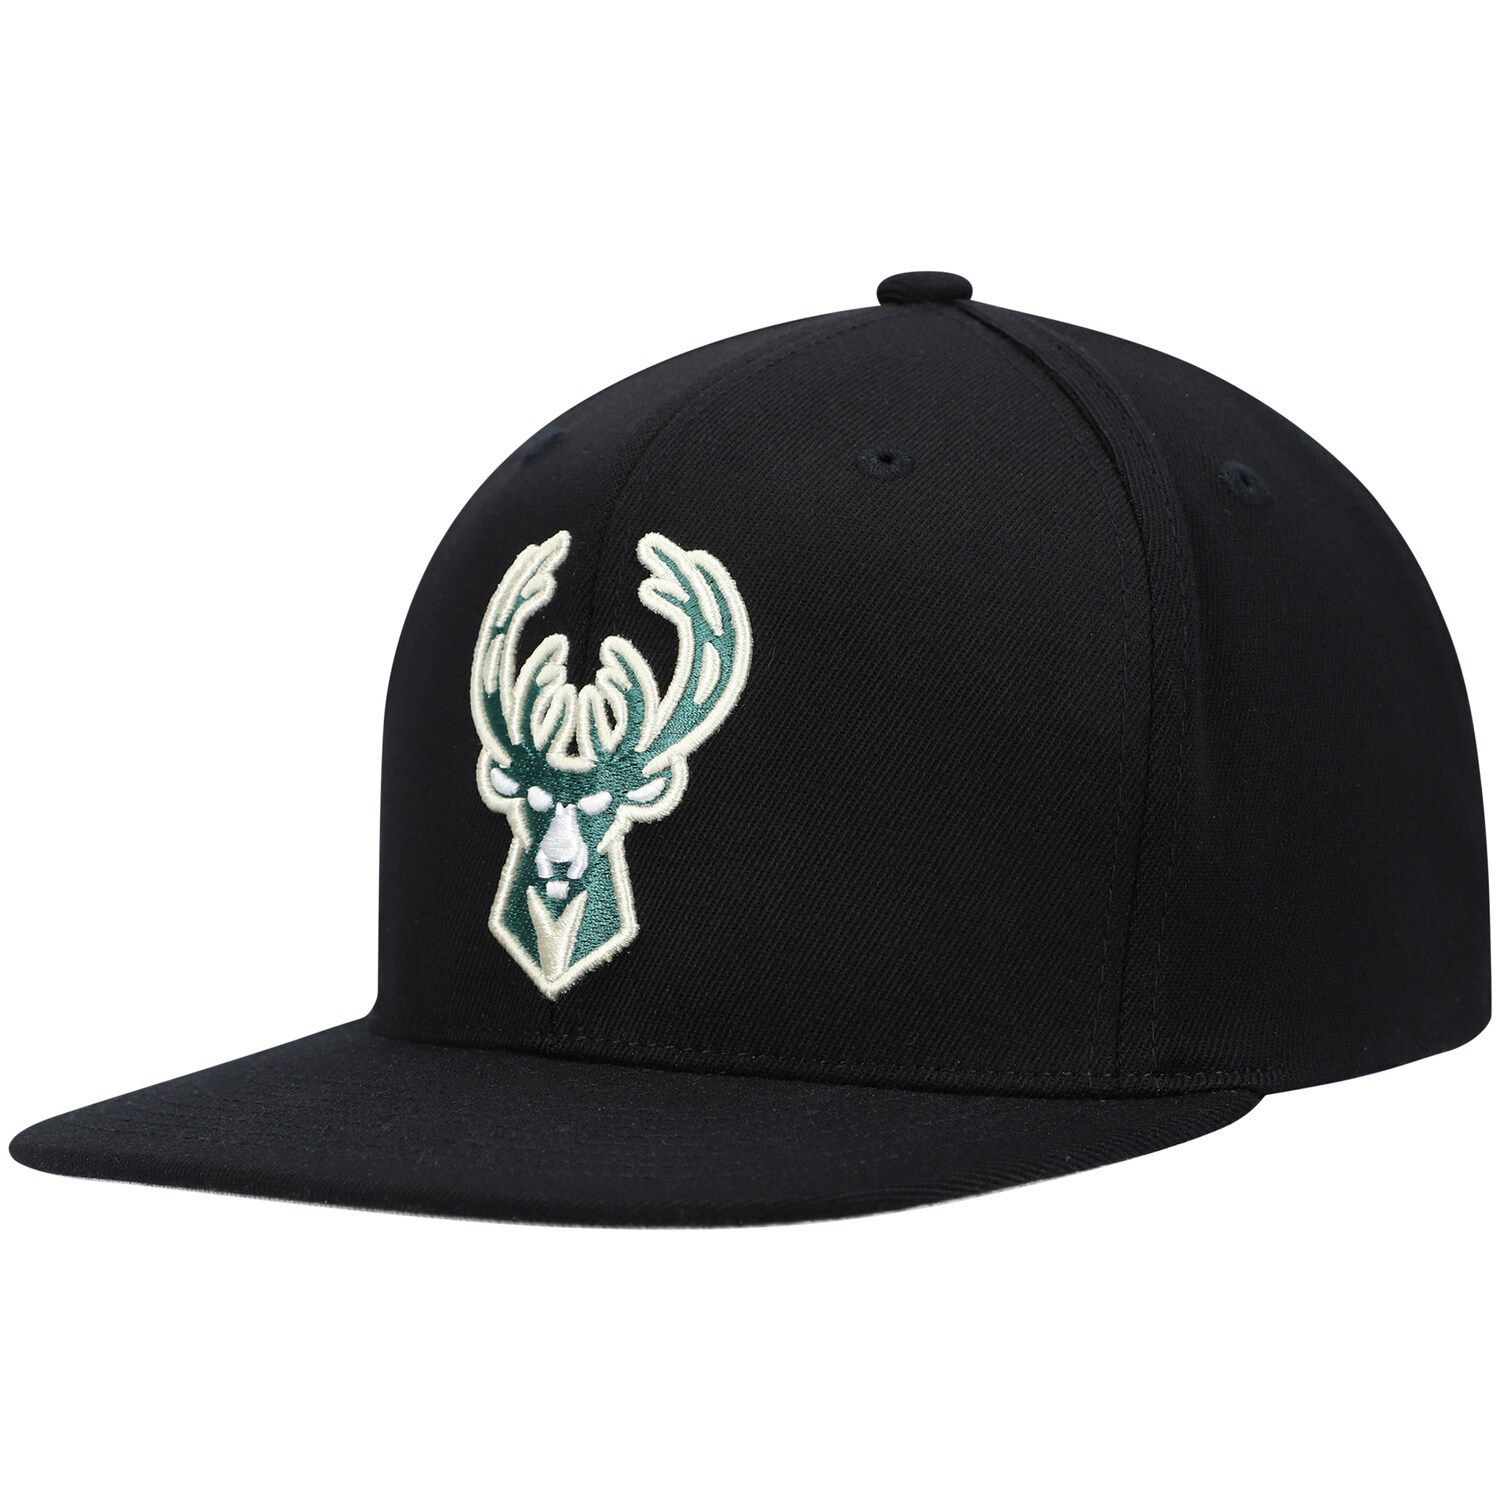 Image for Unbranded Men's Mitchell & Ness Black Milwaukee Bucks Downtime Redline Snapback Hat at Kohl's.